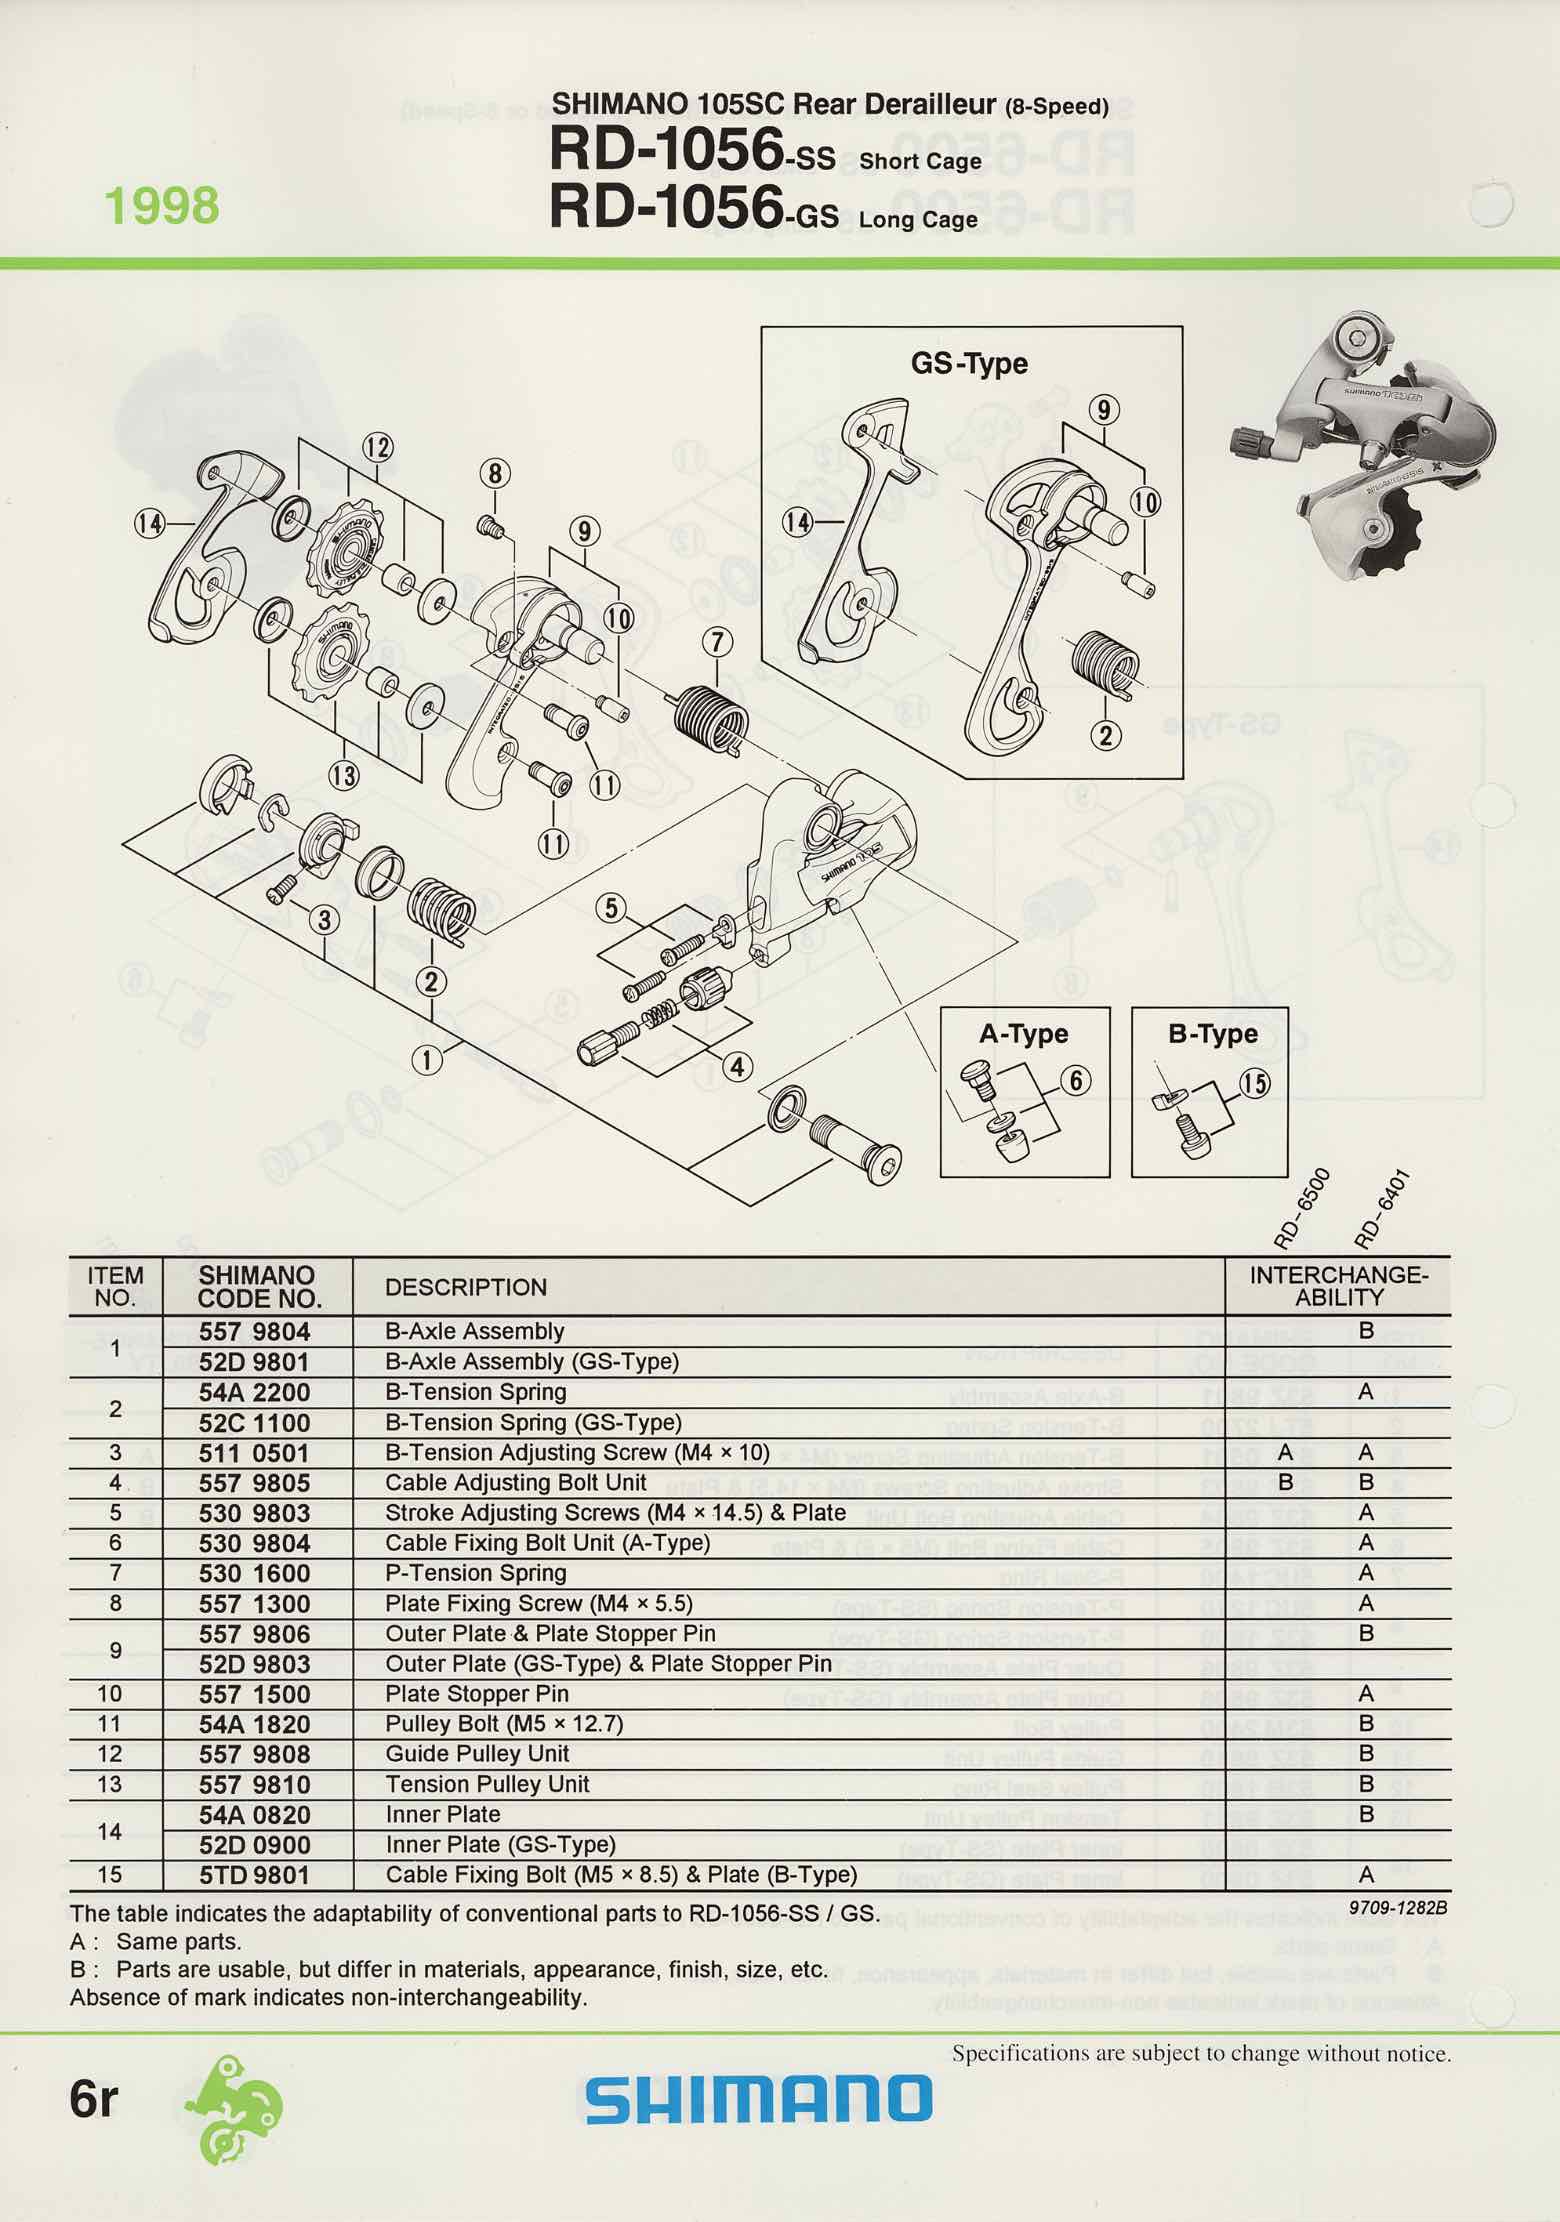 Shimano Spare Parts Catalogue - 1994 to 2004 s5r p6r main image